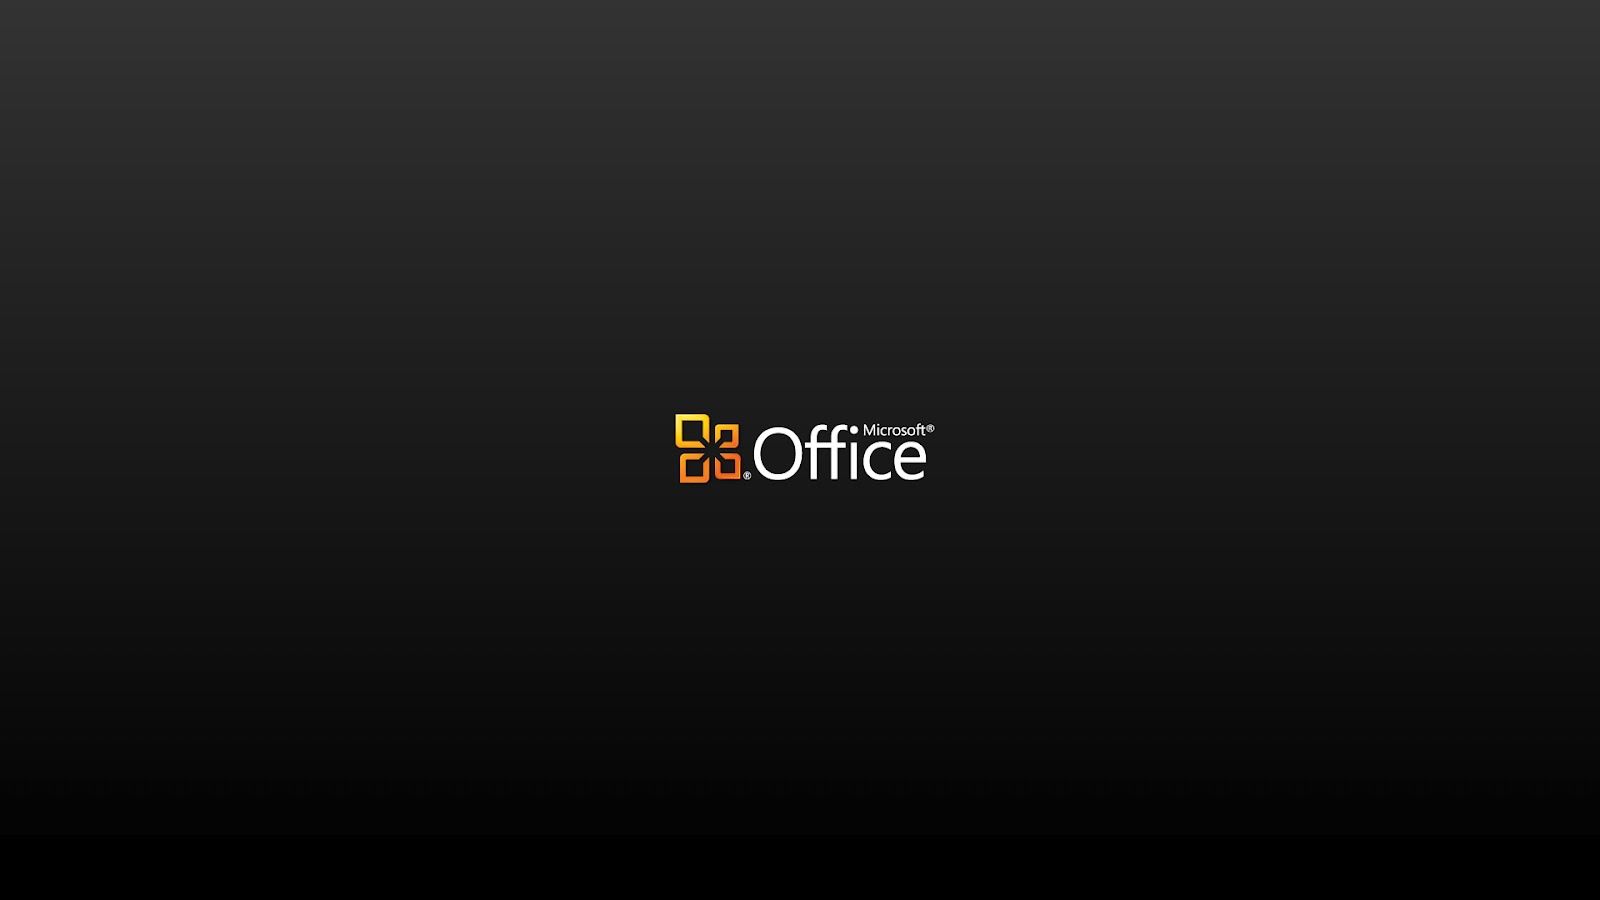 Microsoft Office HD Wallpapers